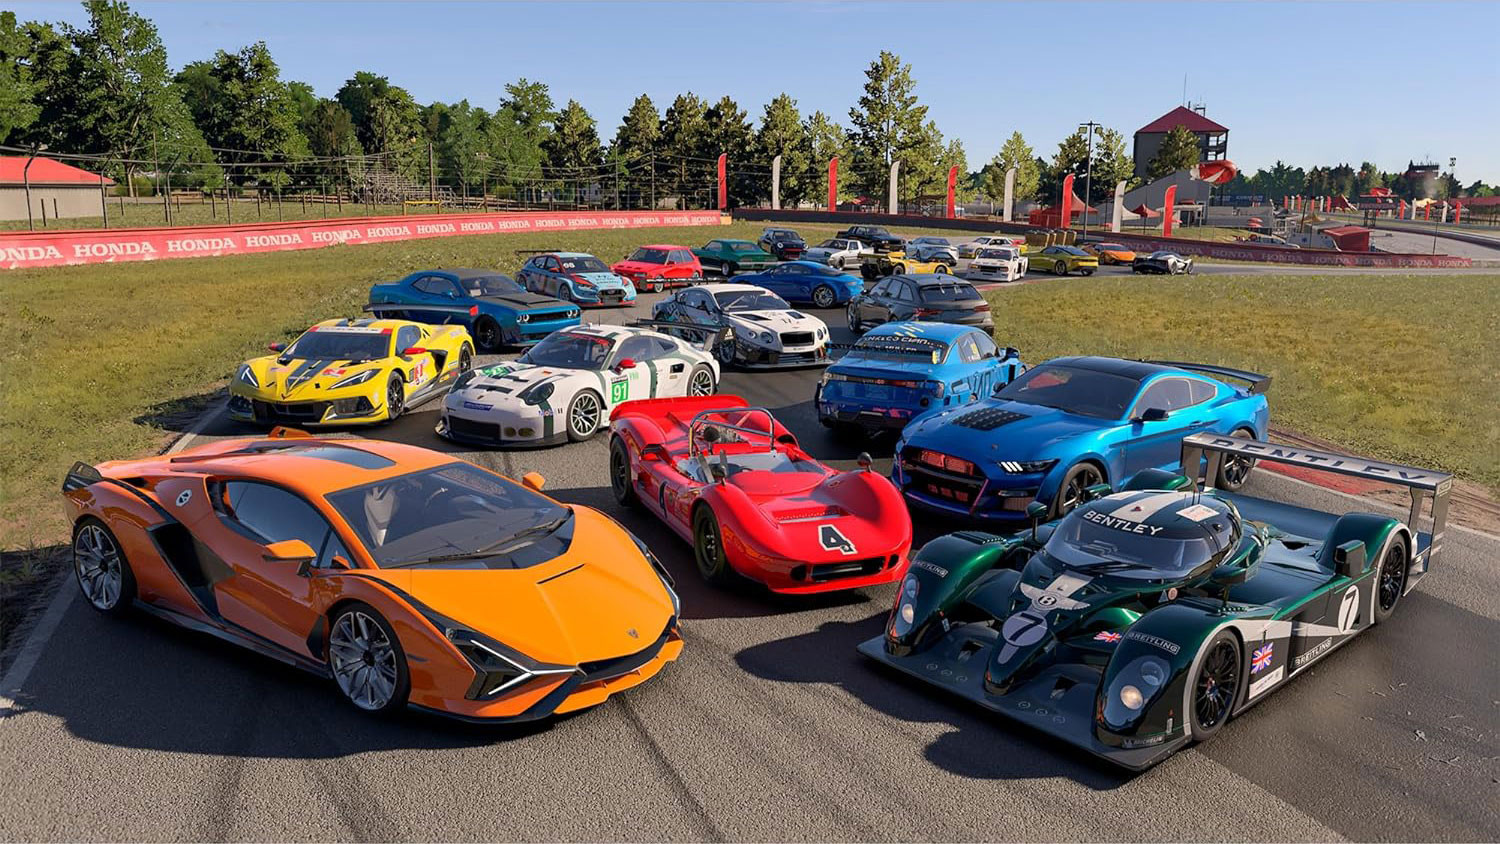 XBOX ONE Volante y Pedales Licencia Original XBOX Racing Overdrive +  Forza Horizon 5